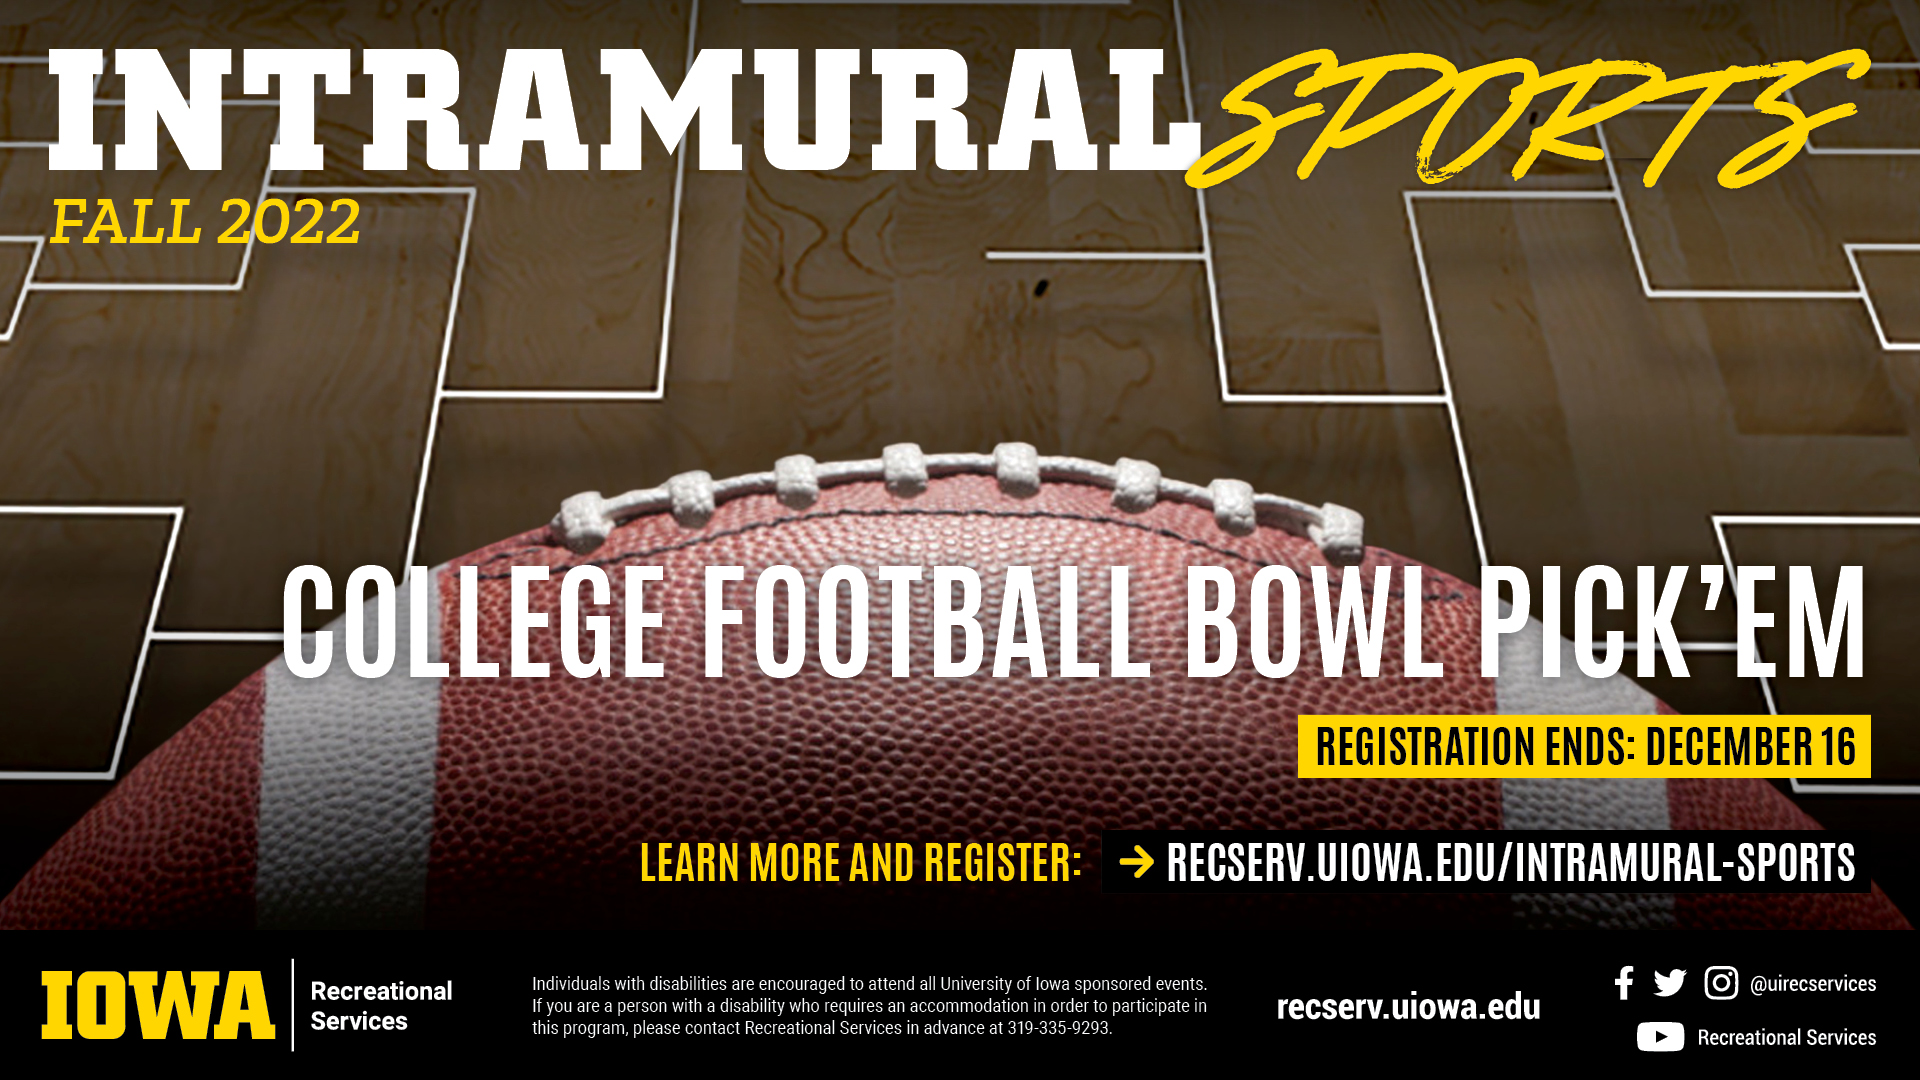 Intramural Sports Fall 2022: College Football Bowl Pick Em. Learn more and register at reserv.uiowa.edu/intramural-sports